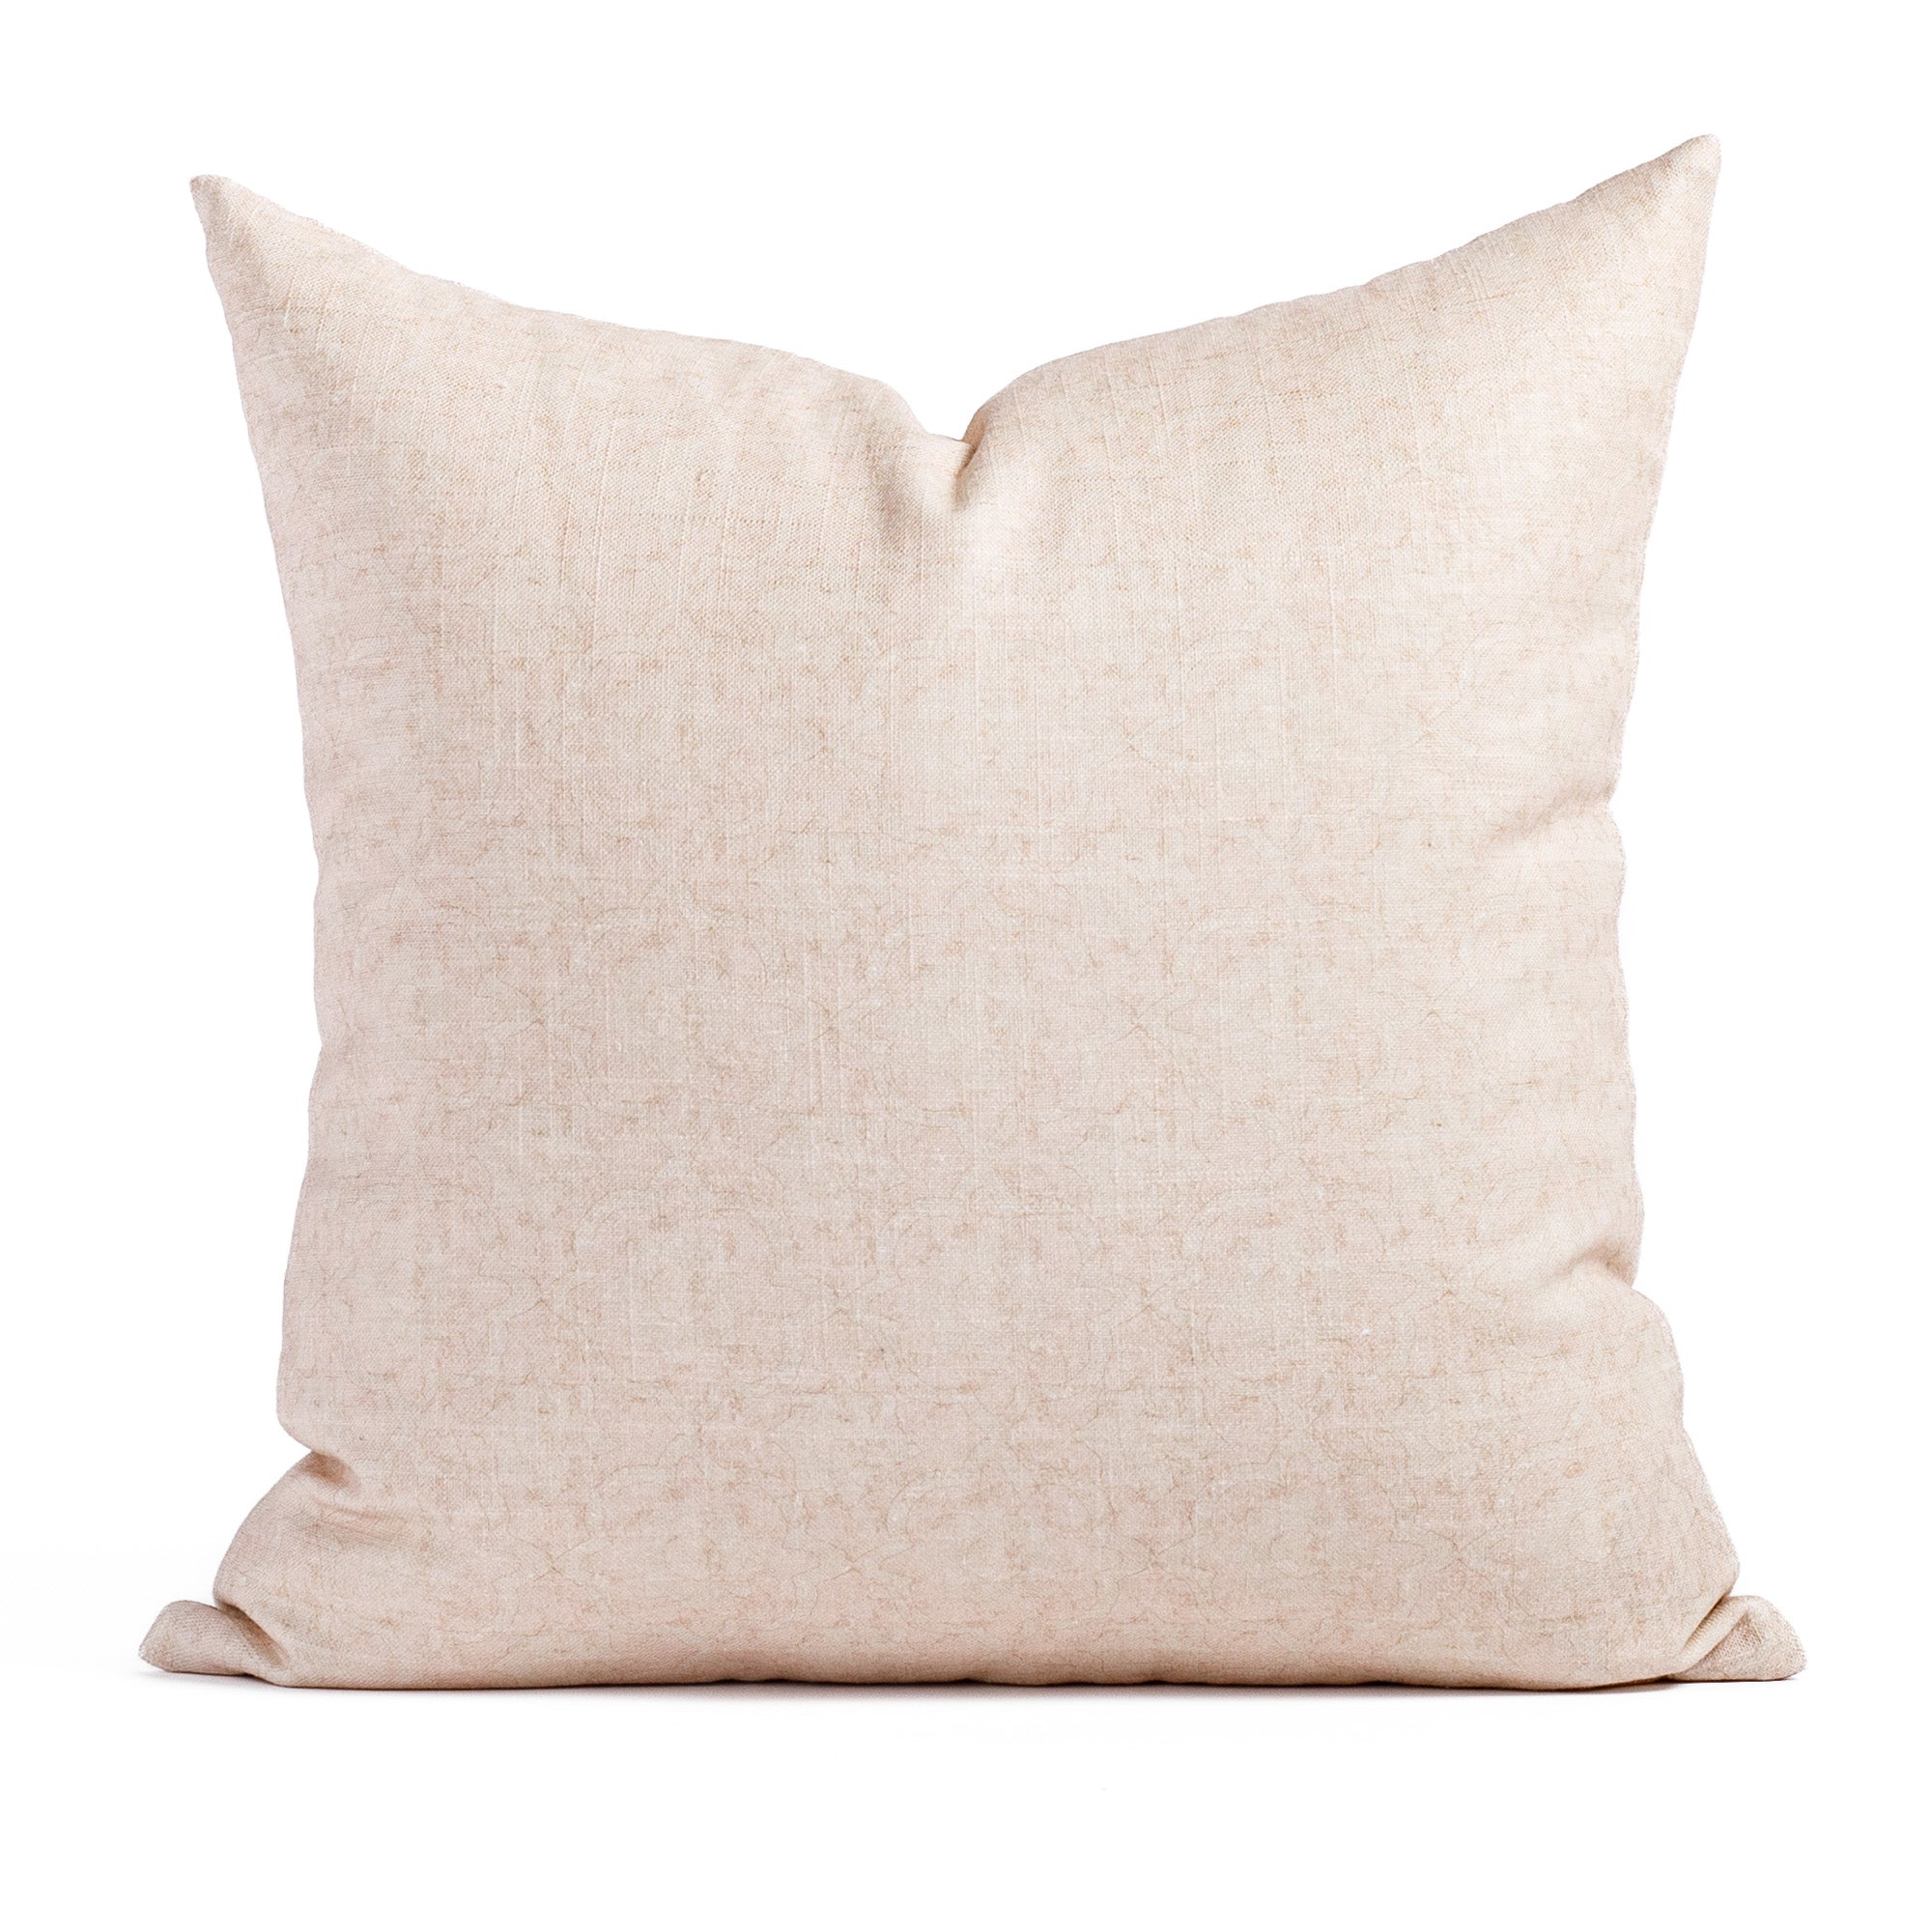 Alia 20x20 Pillow Blush, a light pink medallion print Tonic Living Pillow